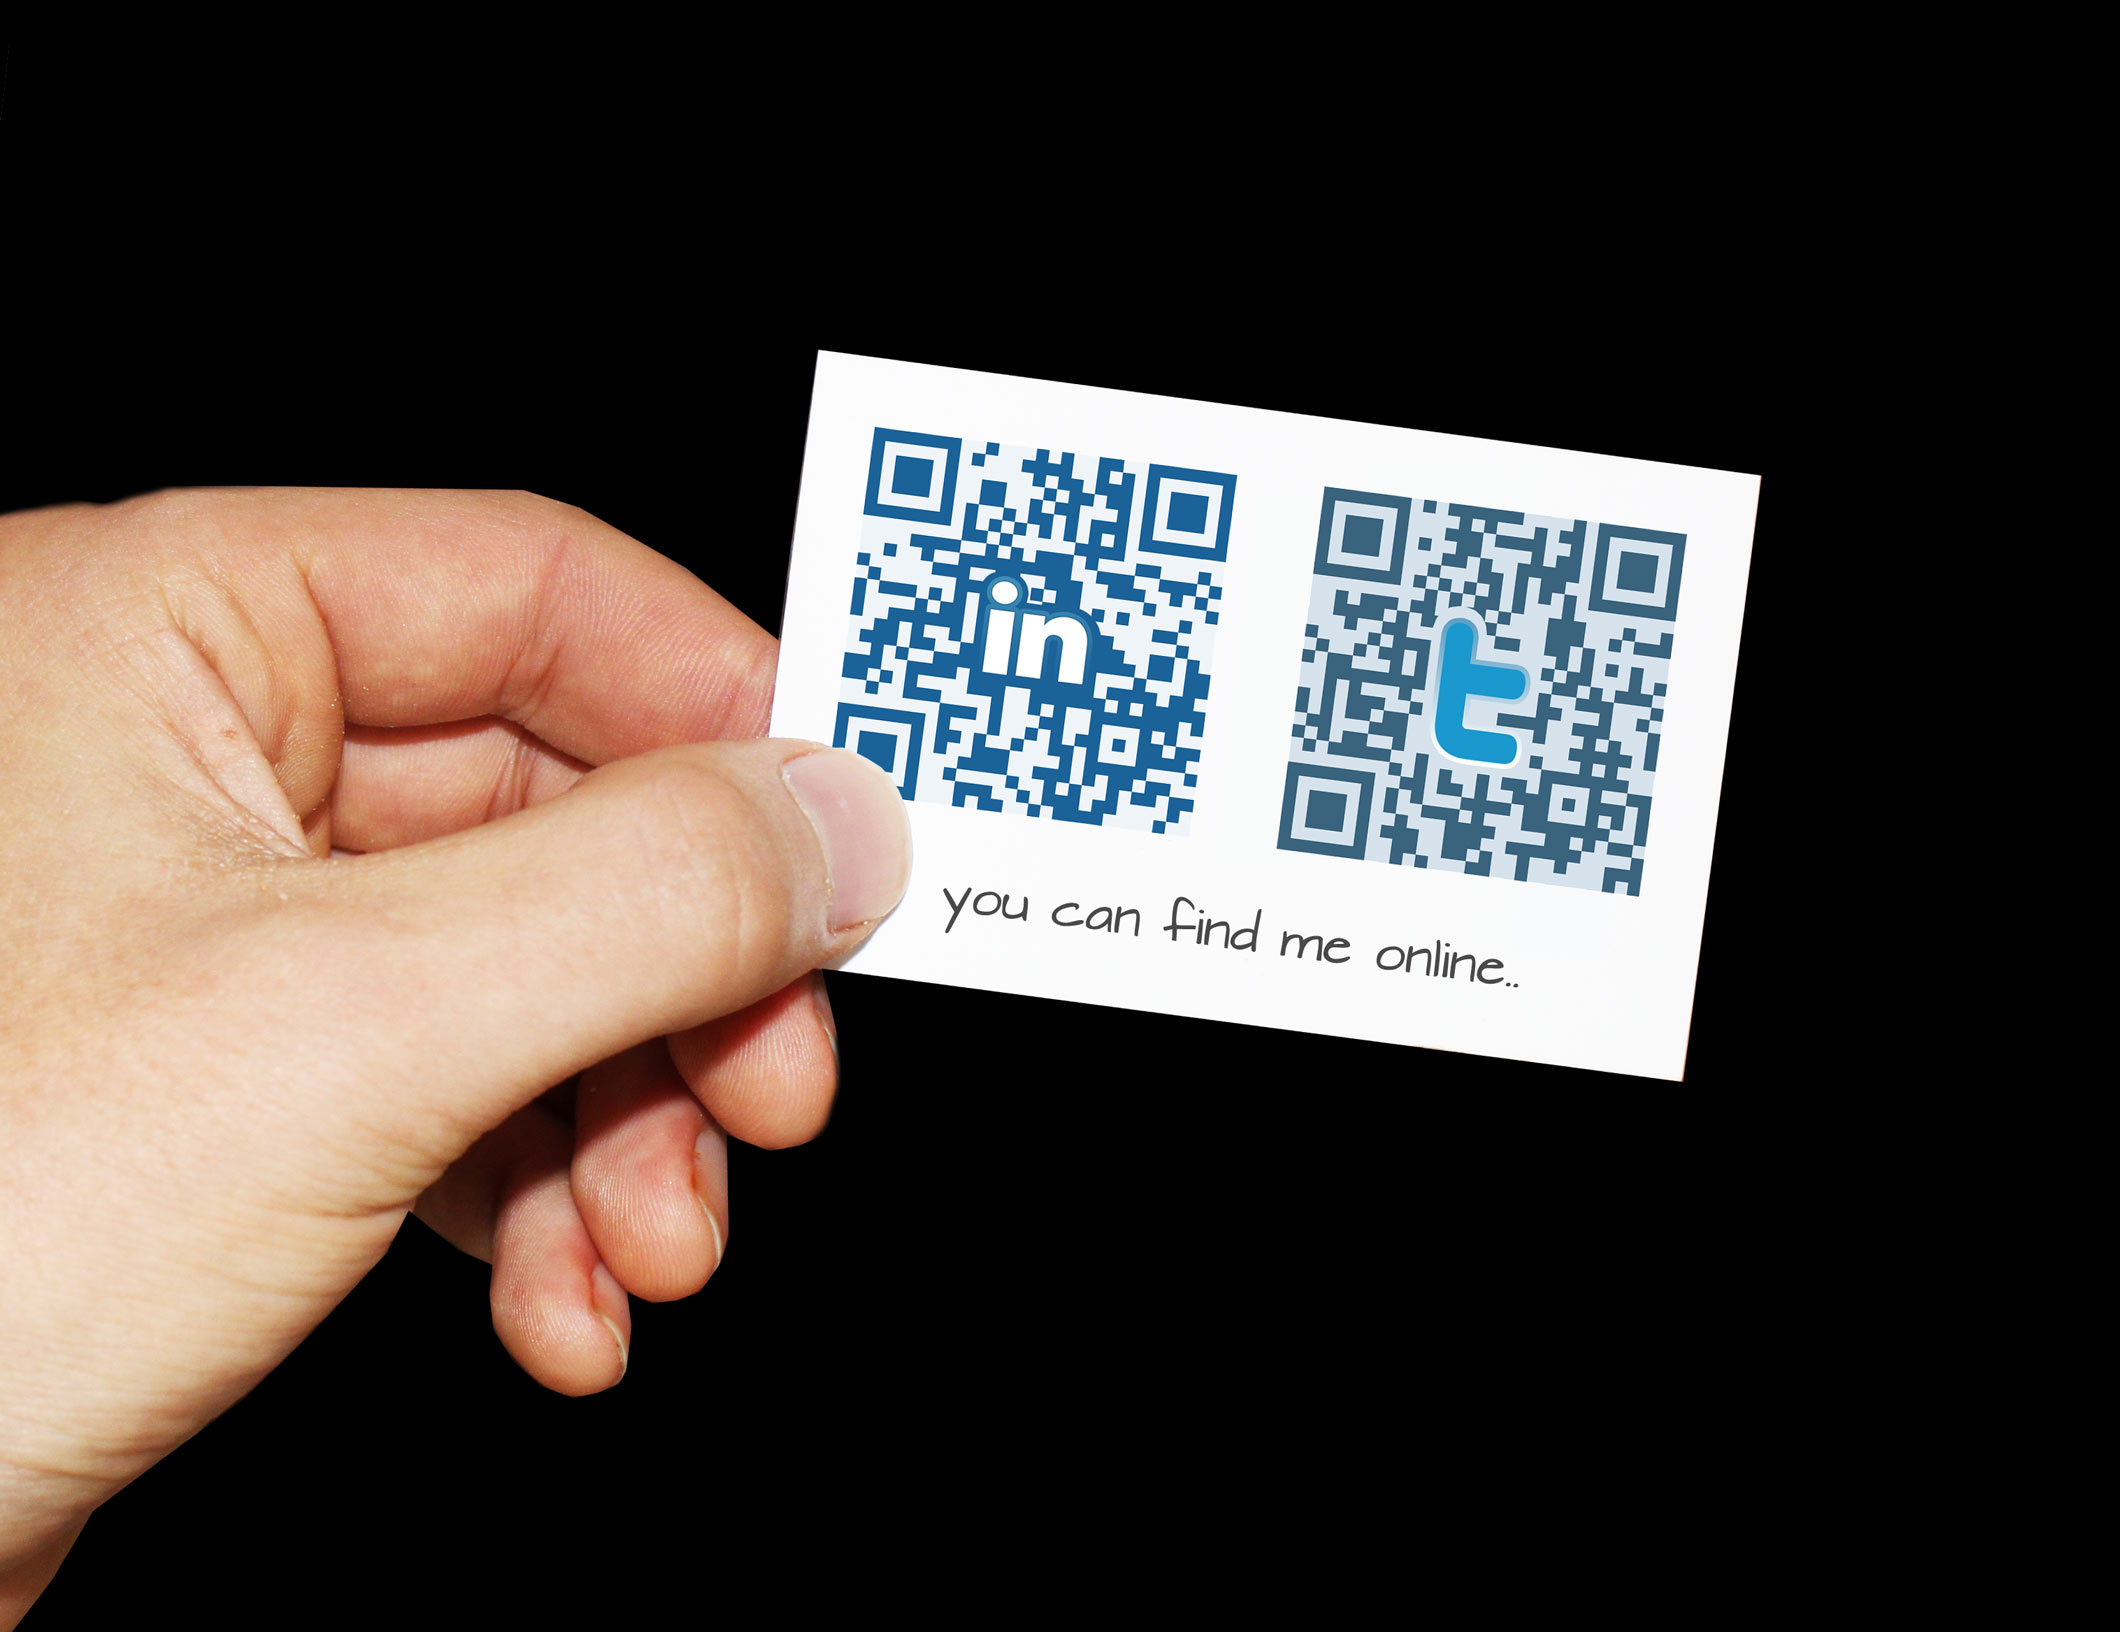 Qr код генератор визитка. Визитка с QR кодом. QR коды на визитке. Образец визитки с QR кодом. Необычная визитка QR код.